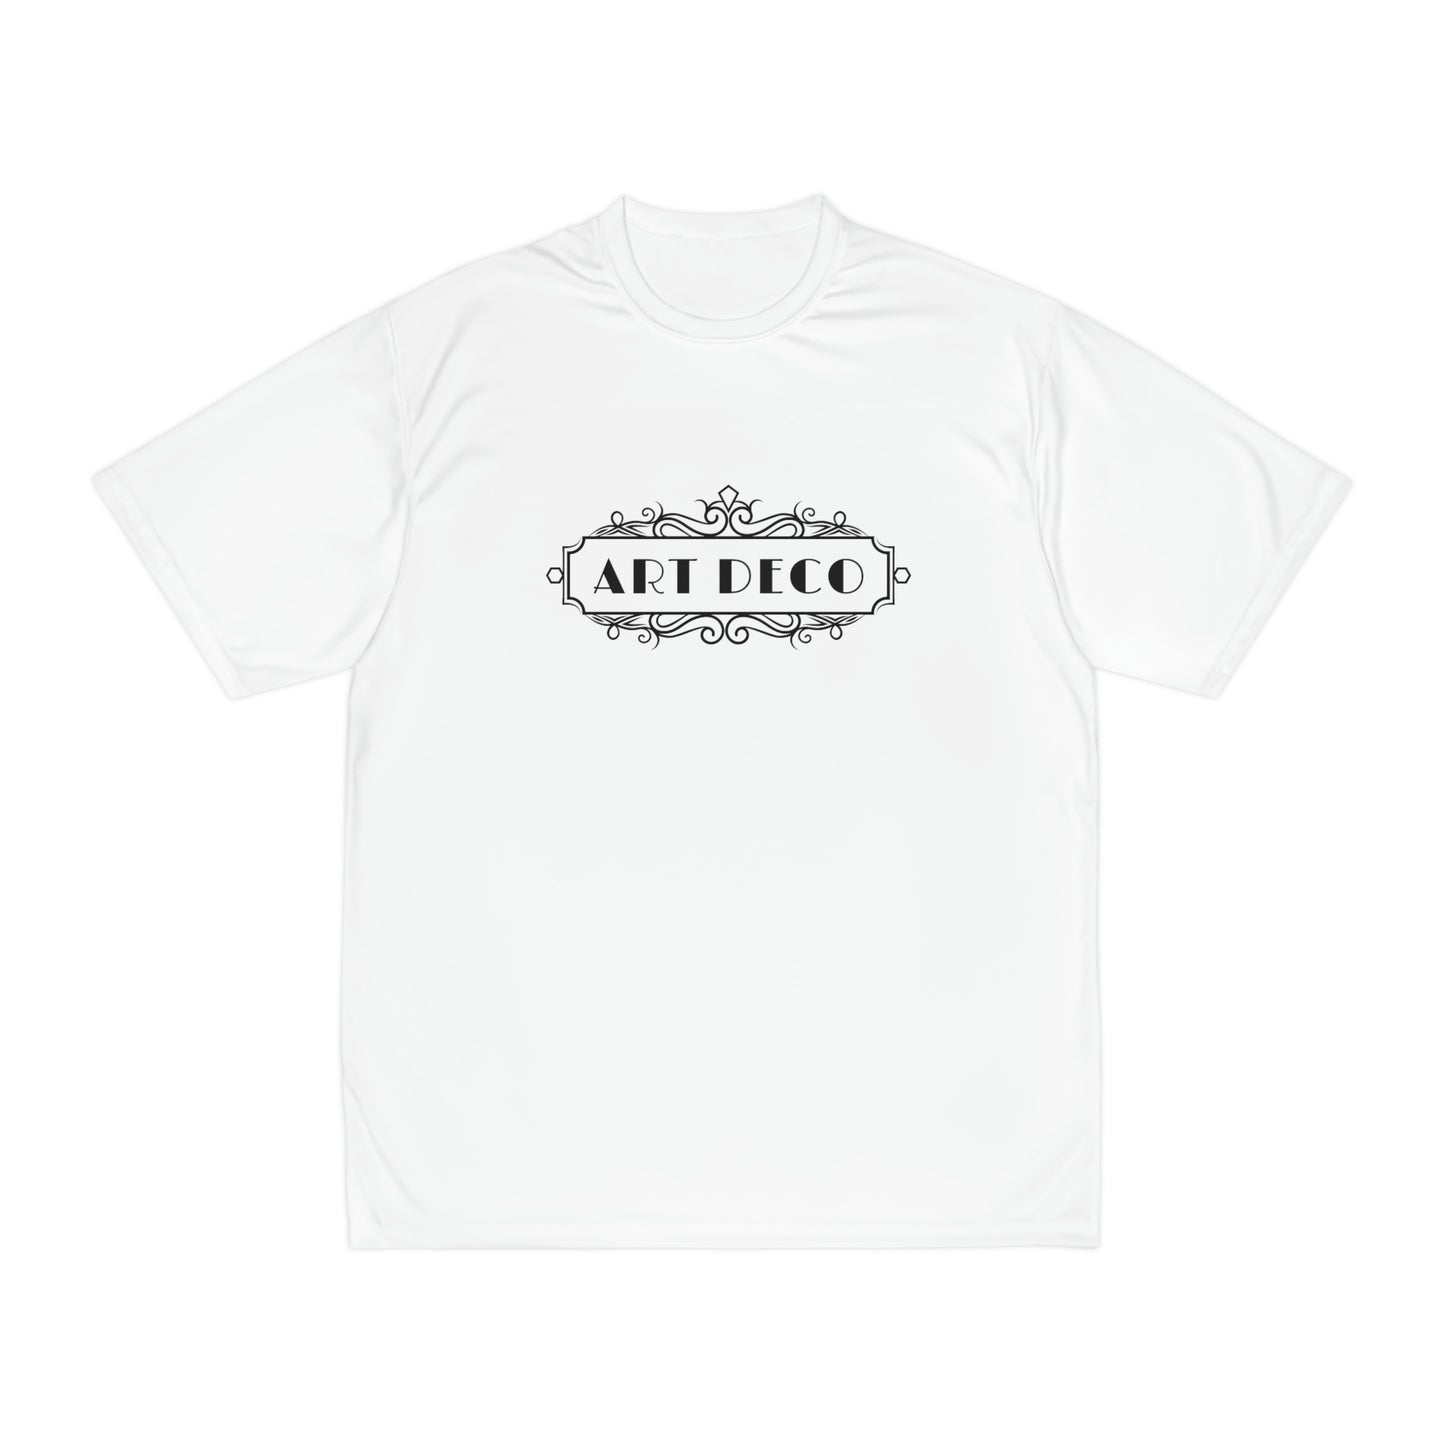 ART DECO - Men's Performance T-Shirt